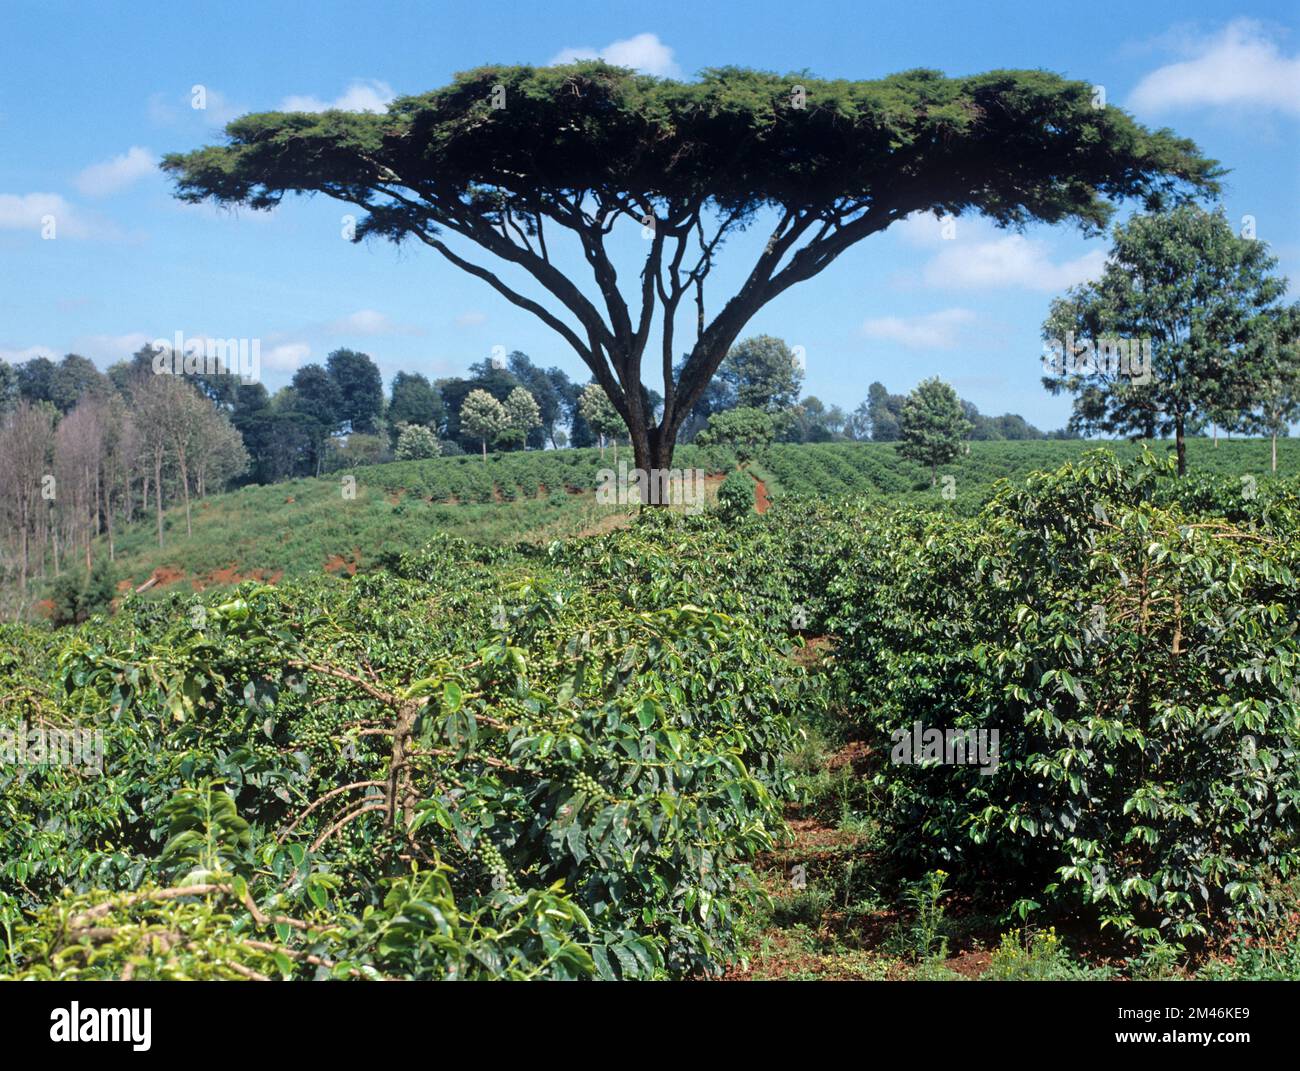 Plantación de café arábica (Coffea arábica) arbustos maduros en baya verde con espino de acacia cerca de Nairobi, Kenia Foto de stock